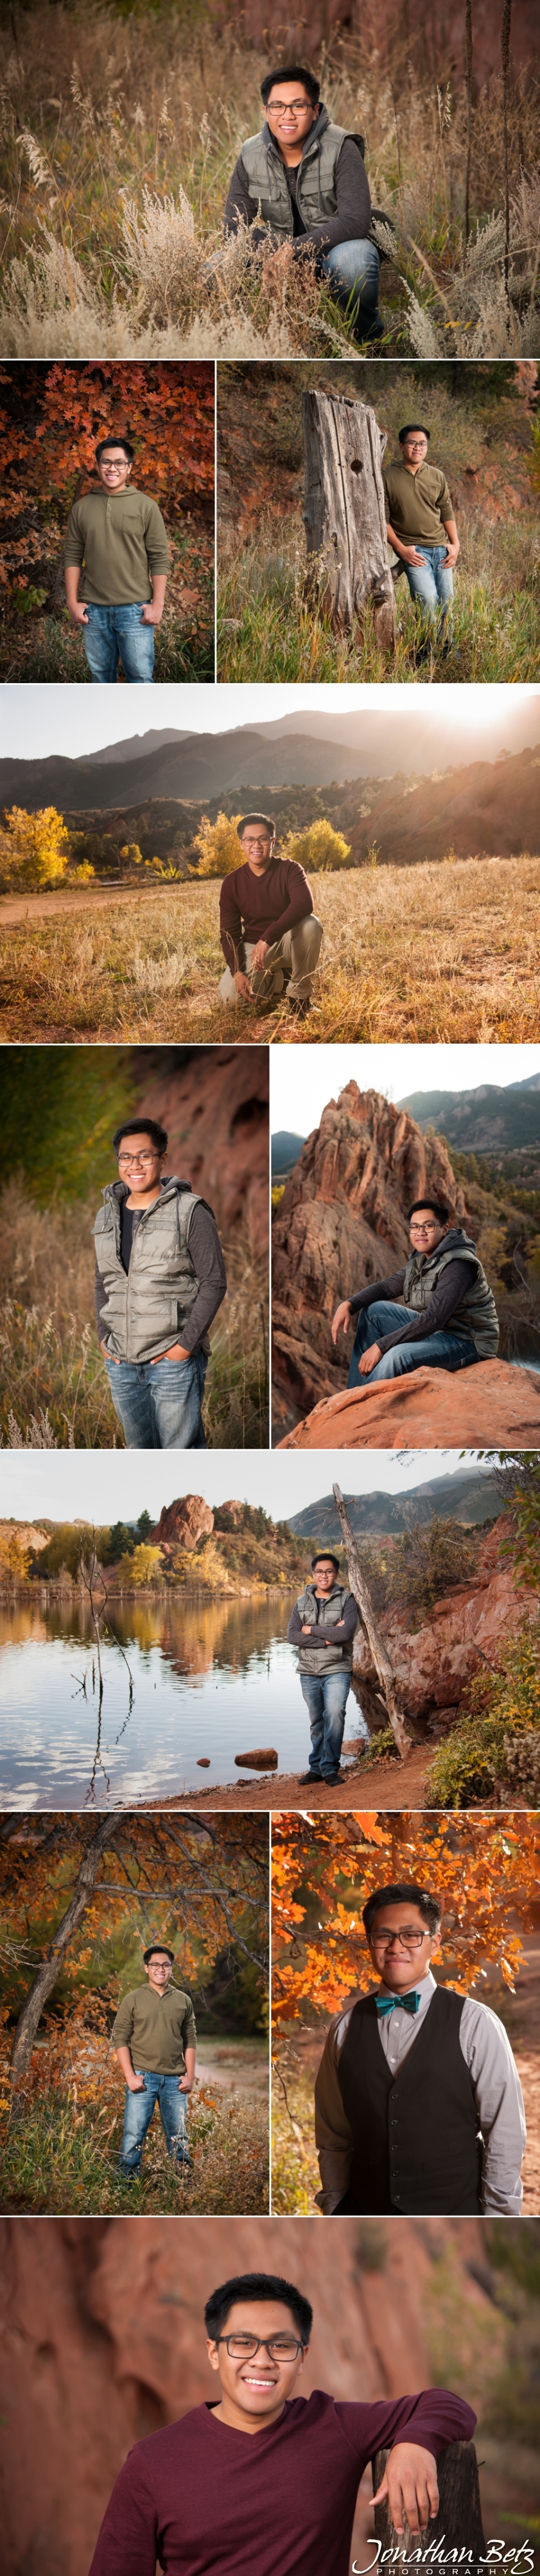 DCC Discovery Canyon Campus High School senior pictures Jonathan Betz Photography Colorado Springs Photographer 1